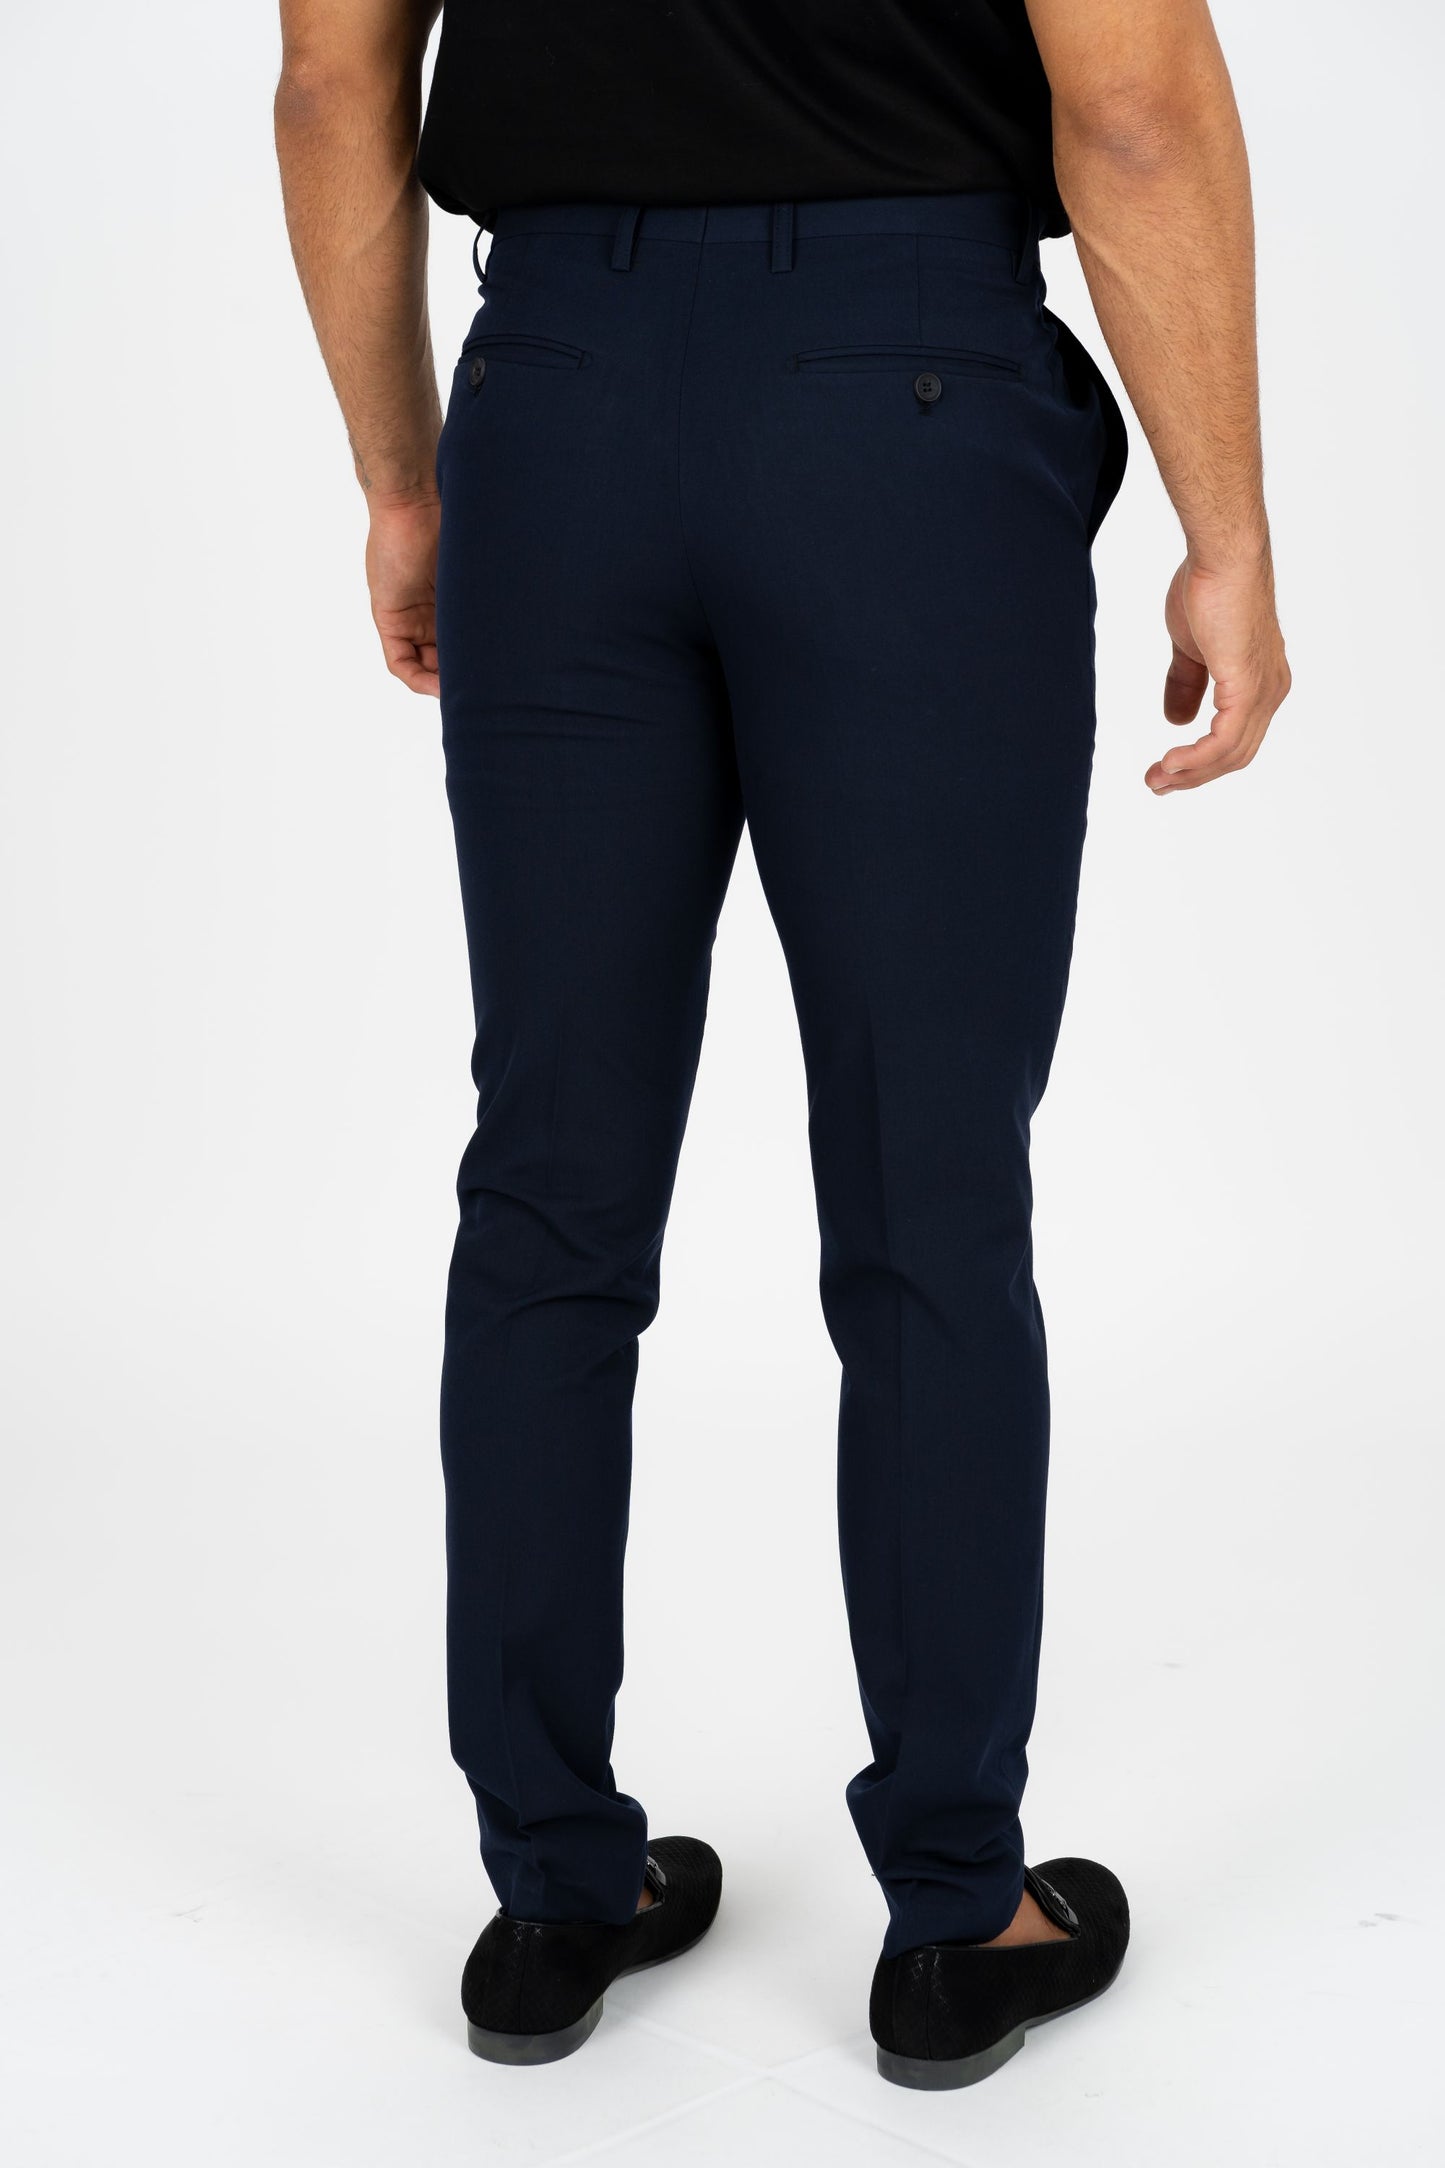 Heath Men's Navy Super Slim Dress Pants